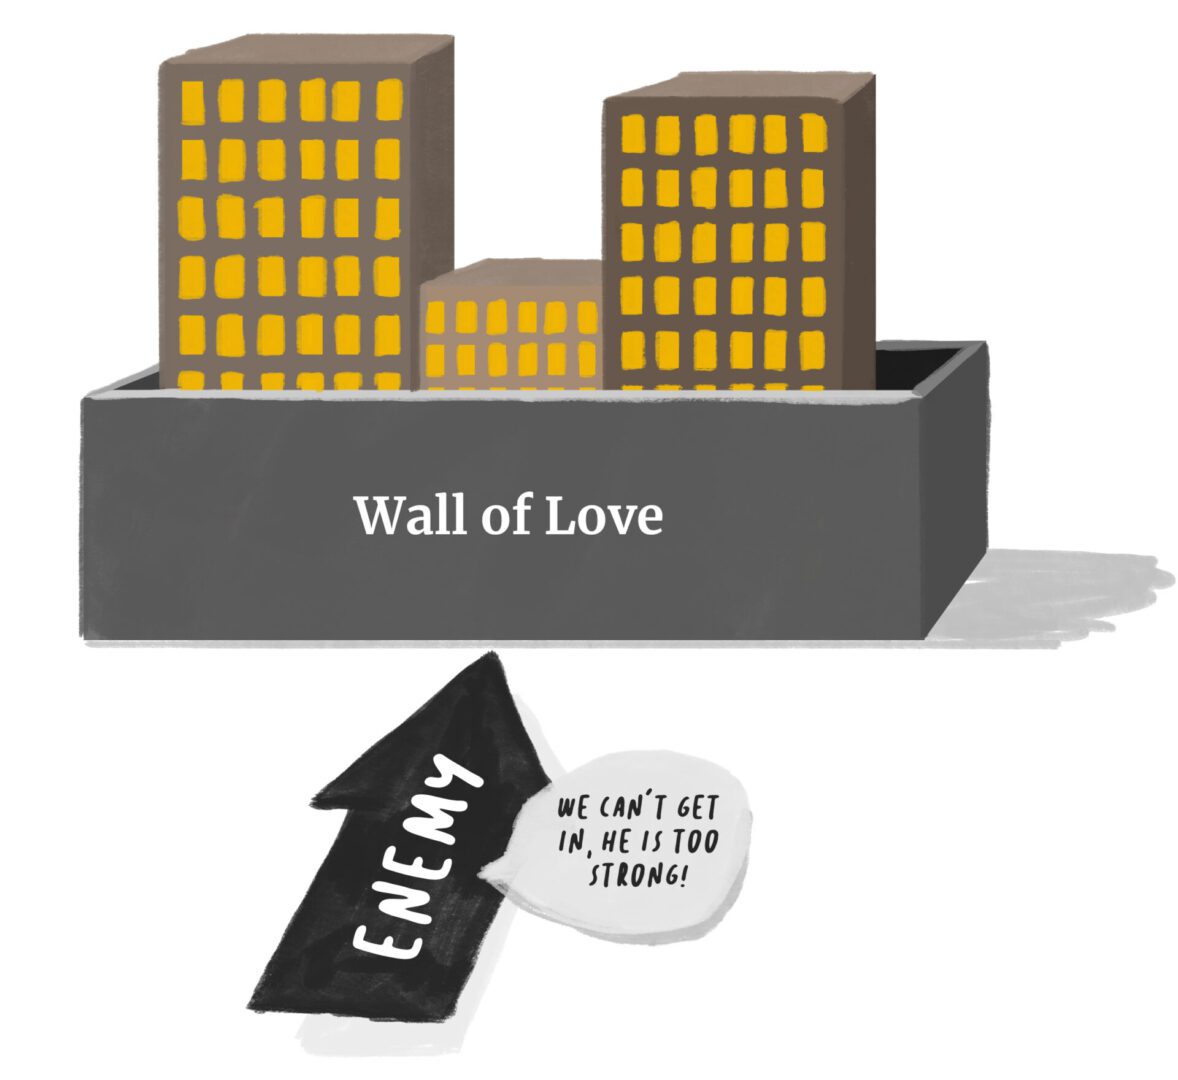 18-Wall of Love - Man 1 & 2 copy